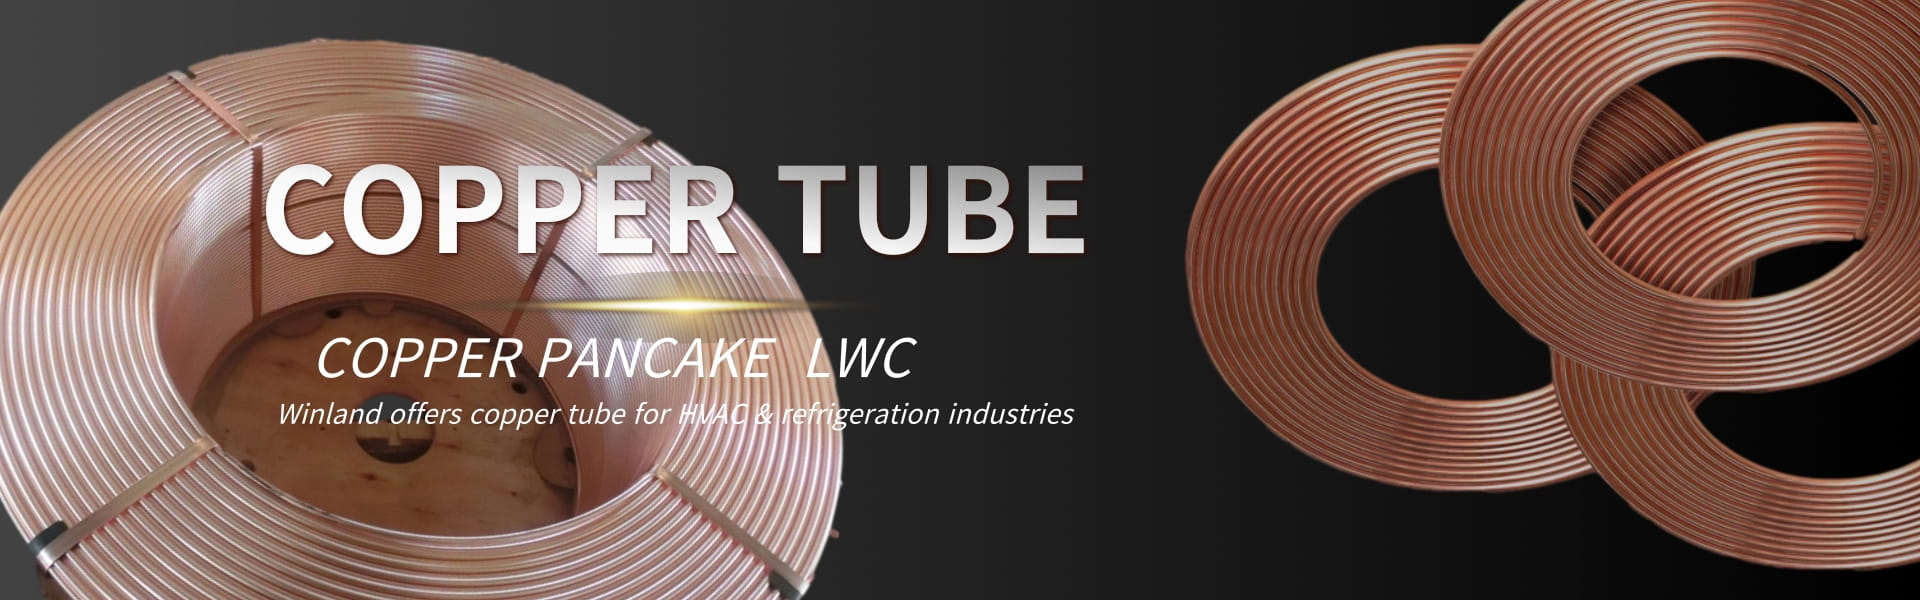 Winland HVAC & Refrigeration Copper Tube, LWC, Copper pancake coil